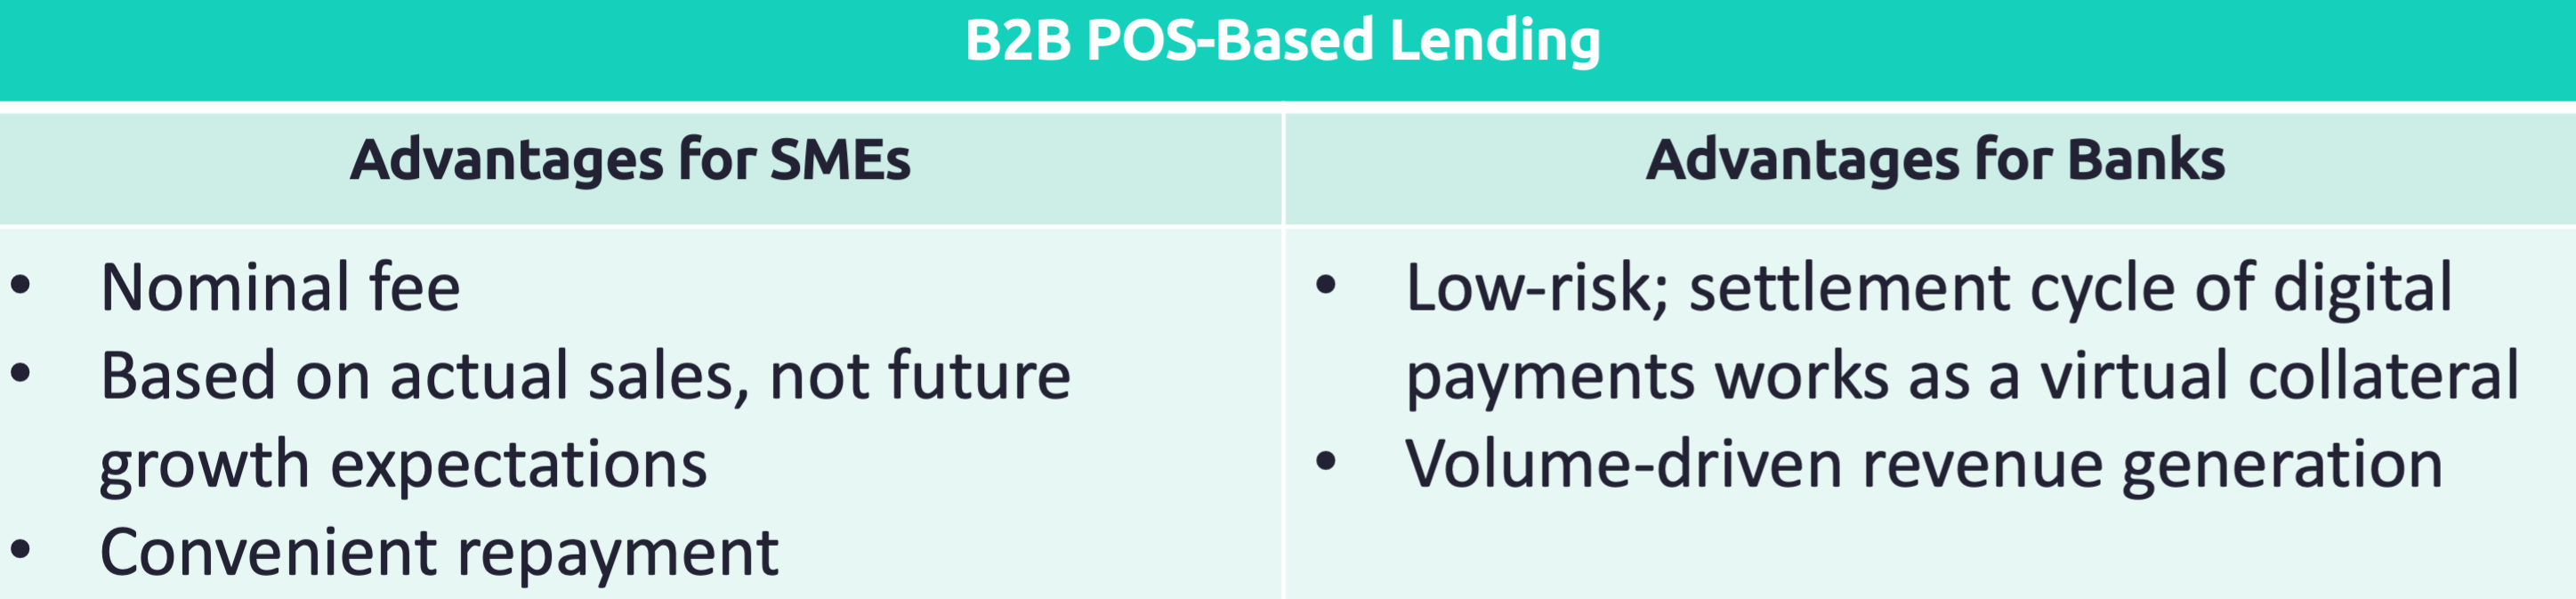 Advantages of B2B POS-based Lending